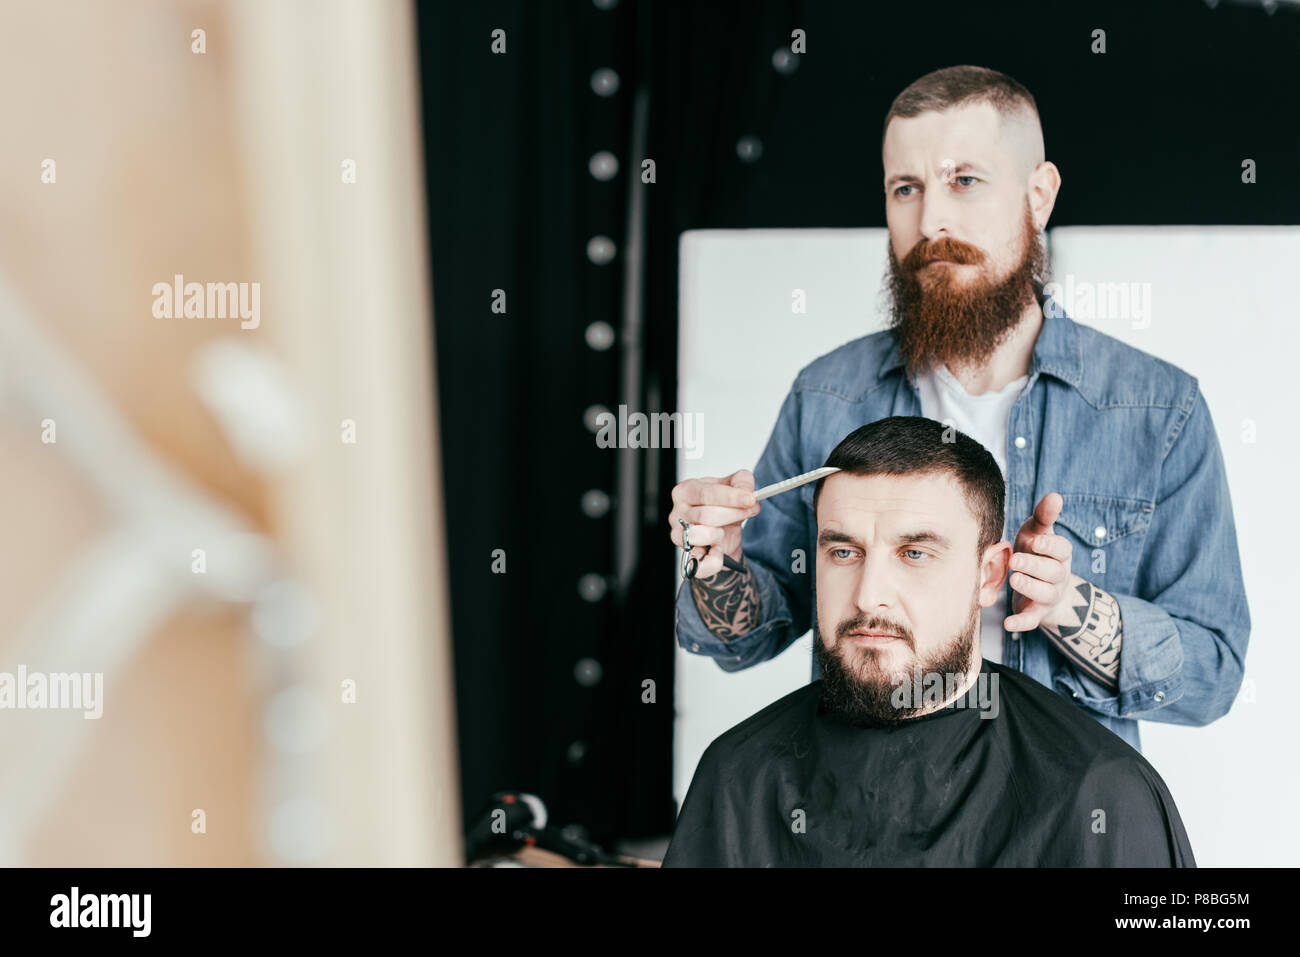 barber looking at customer haircut in mirror at barbershop Stock Photo